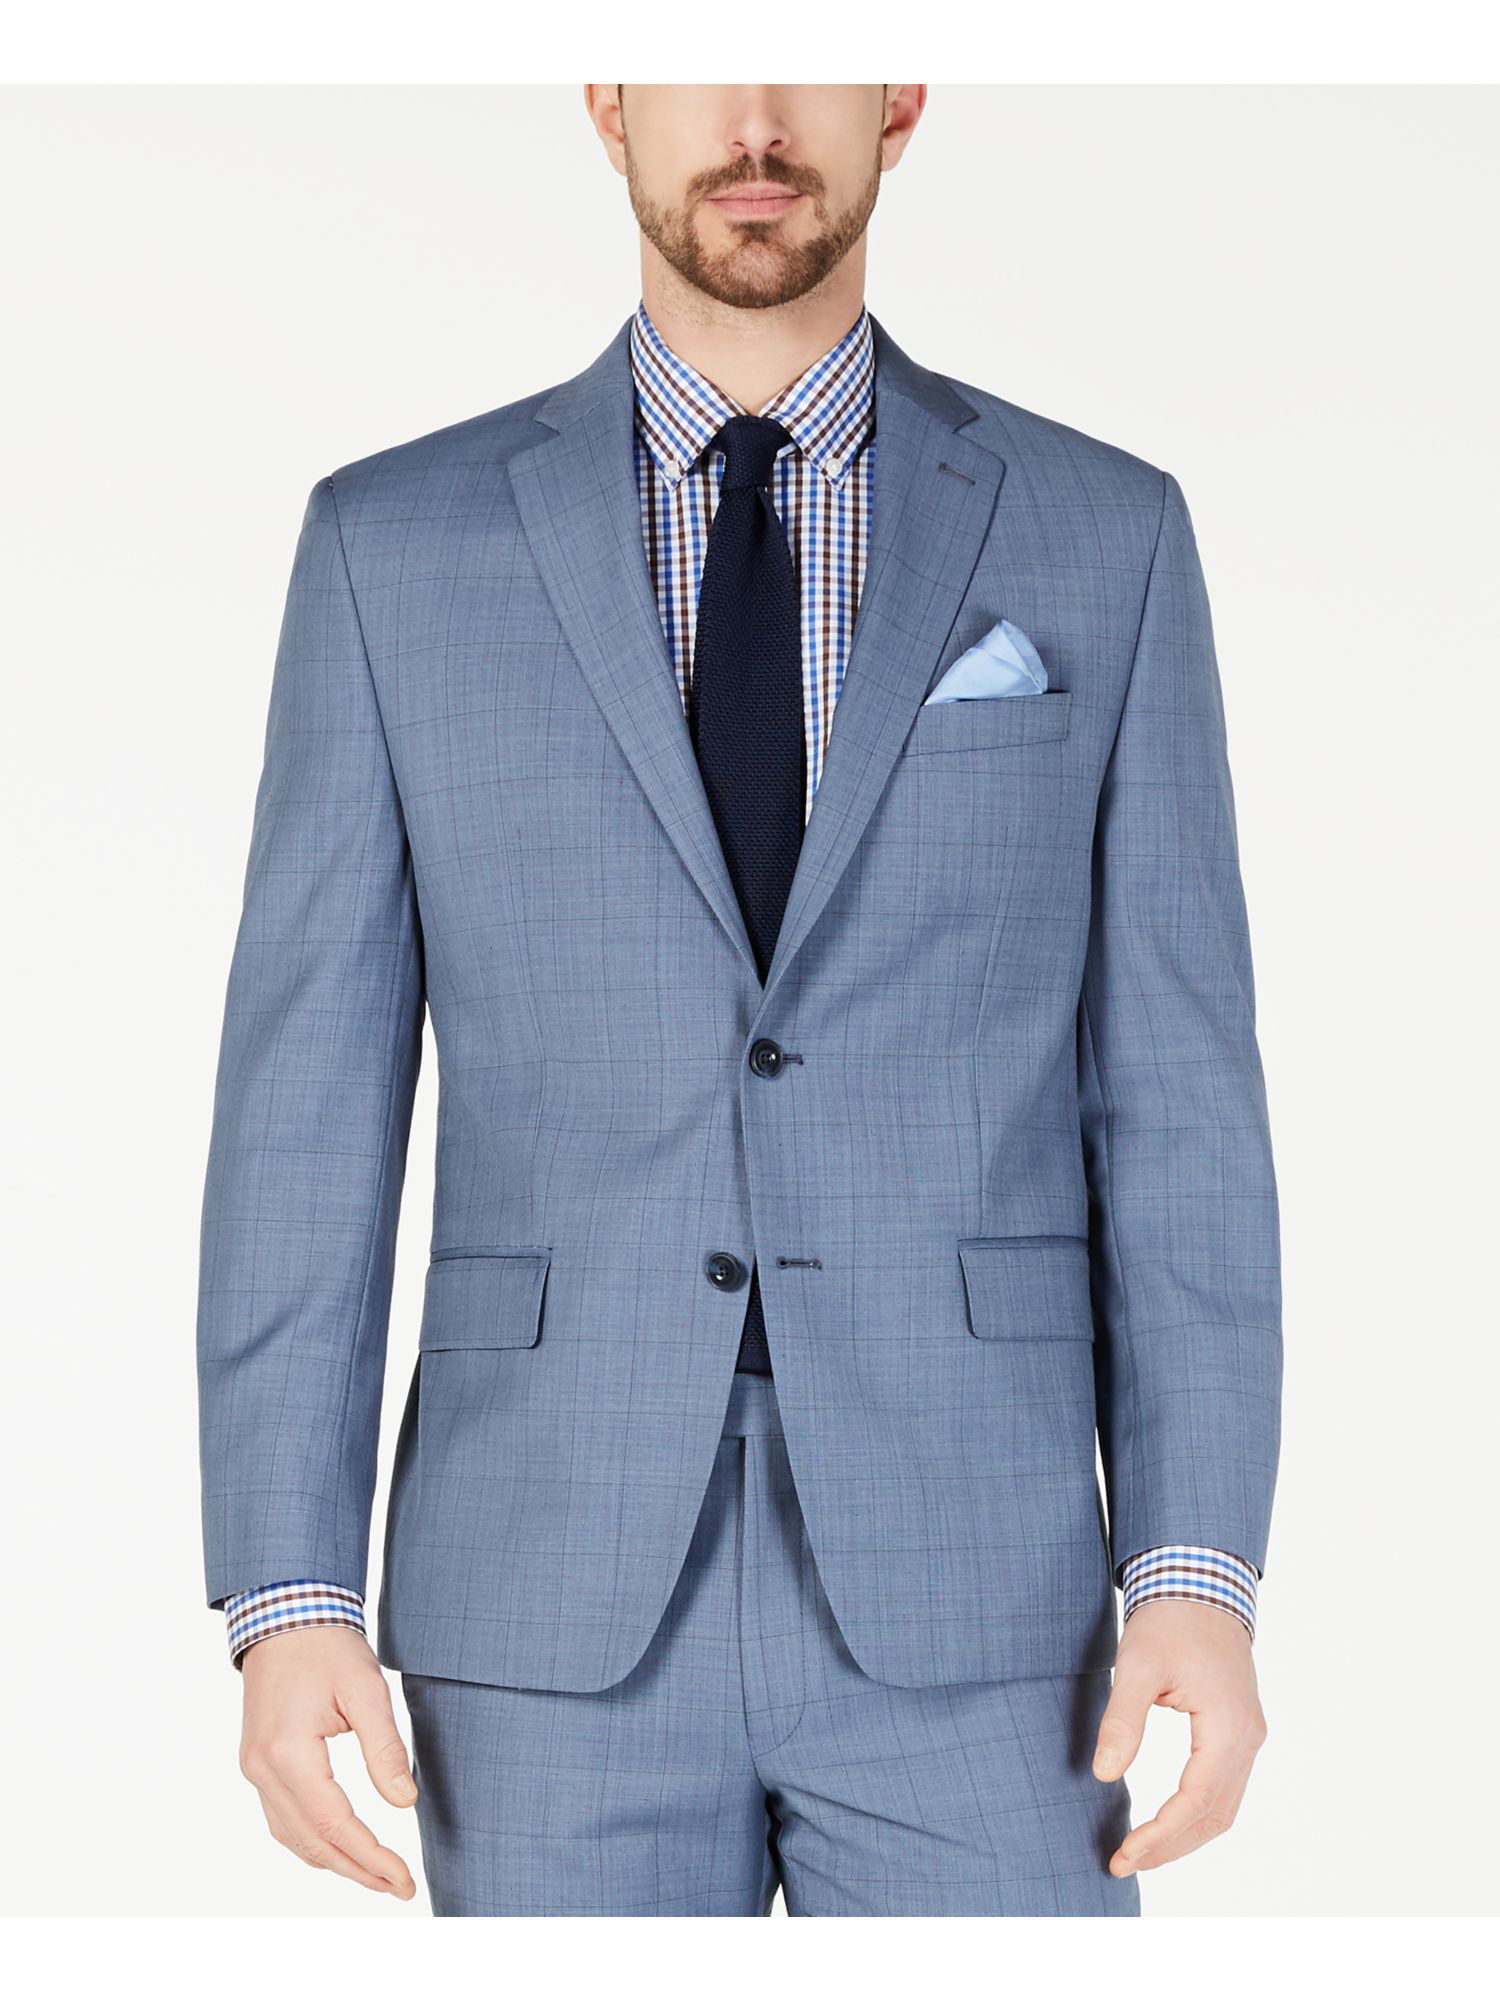 MICHAEL KORS Mens Blue Windowpane Plaid Wool Blend Suit Jacket 50L -  